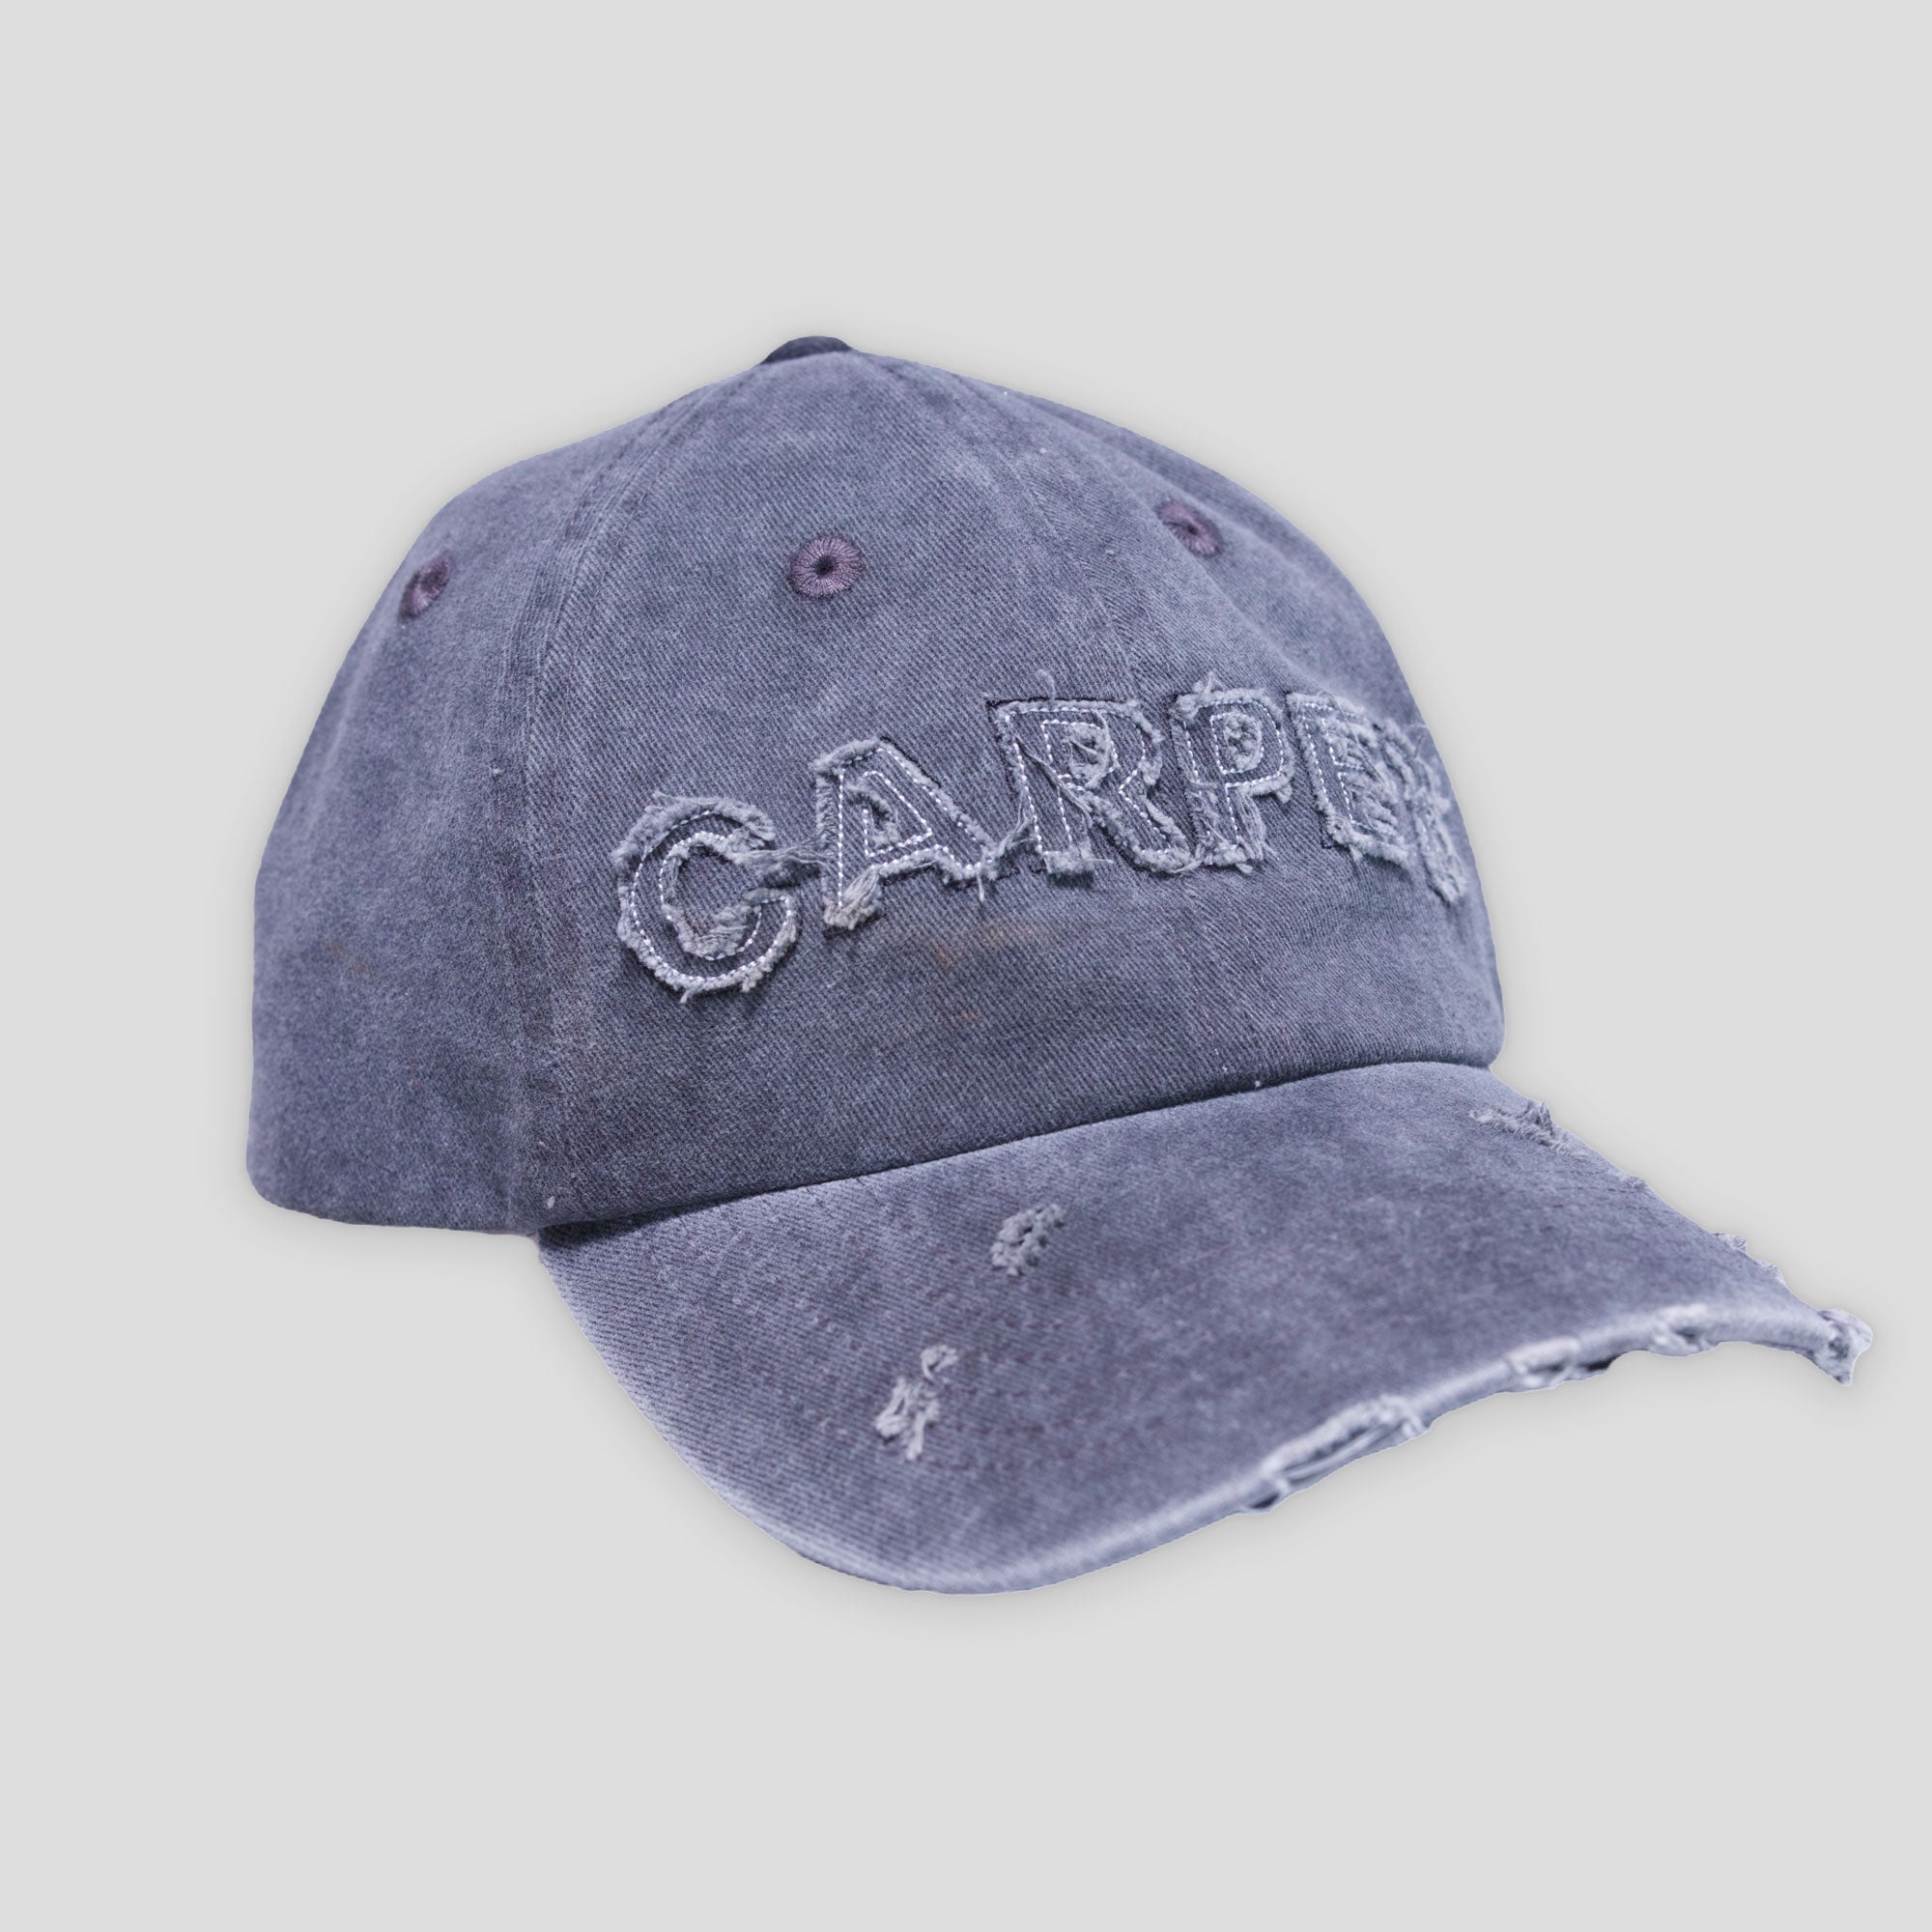 Carpet Company Distressed Cap - Grey